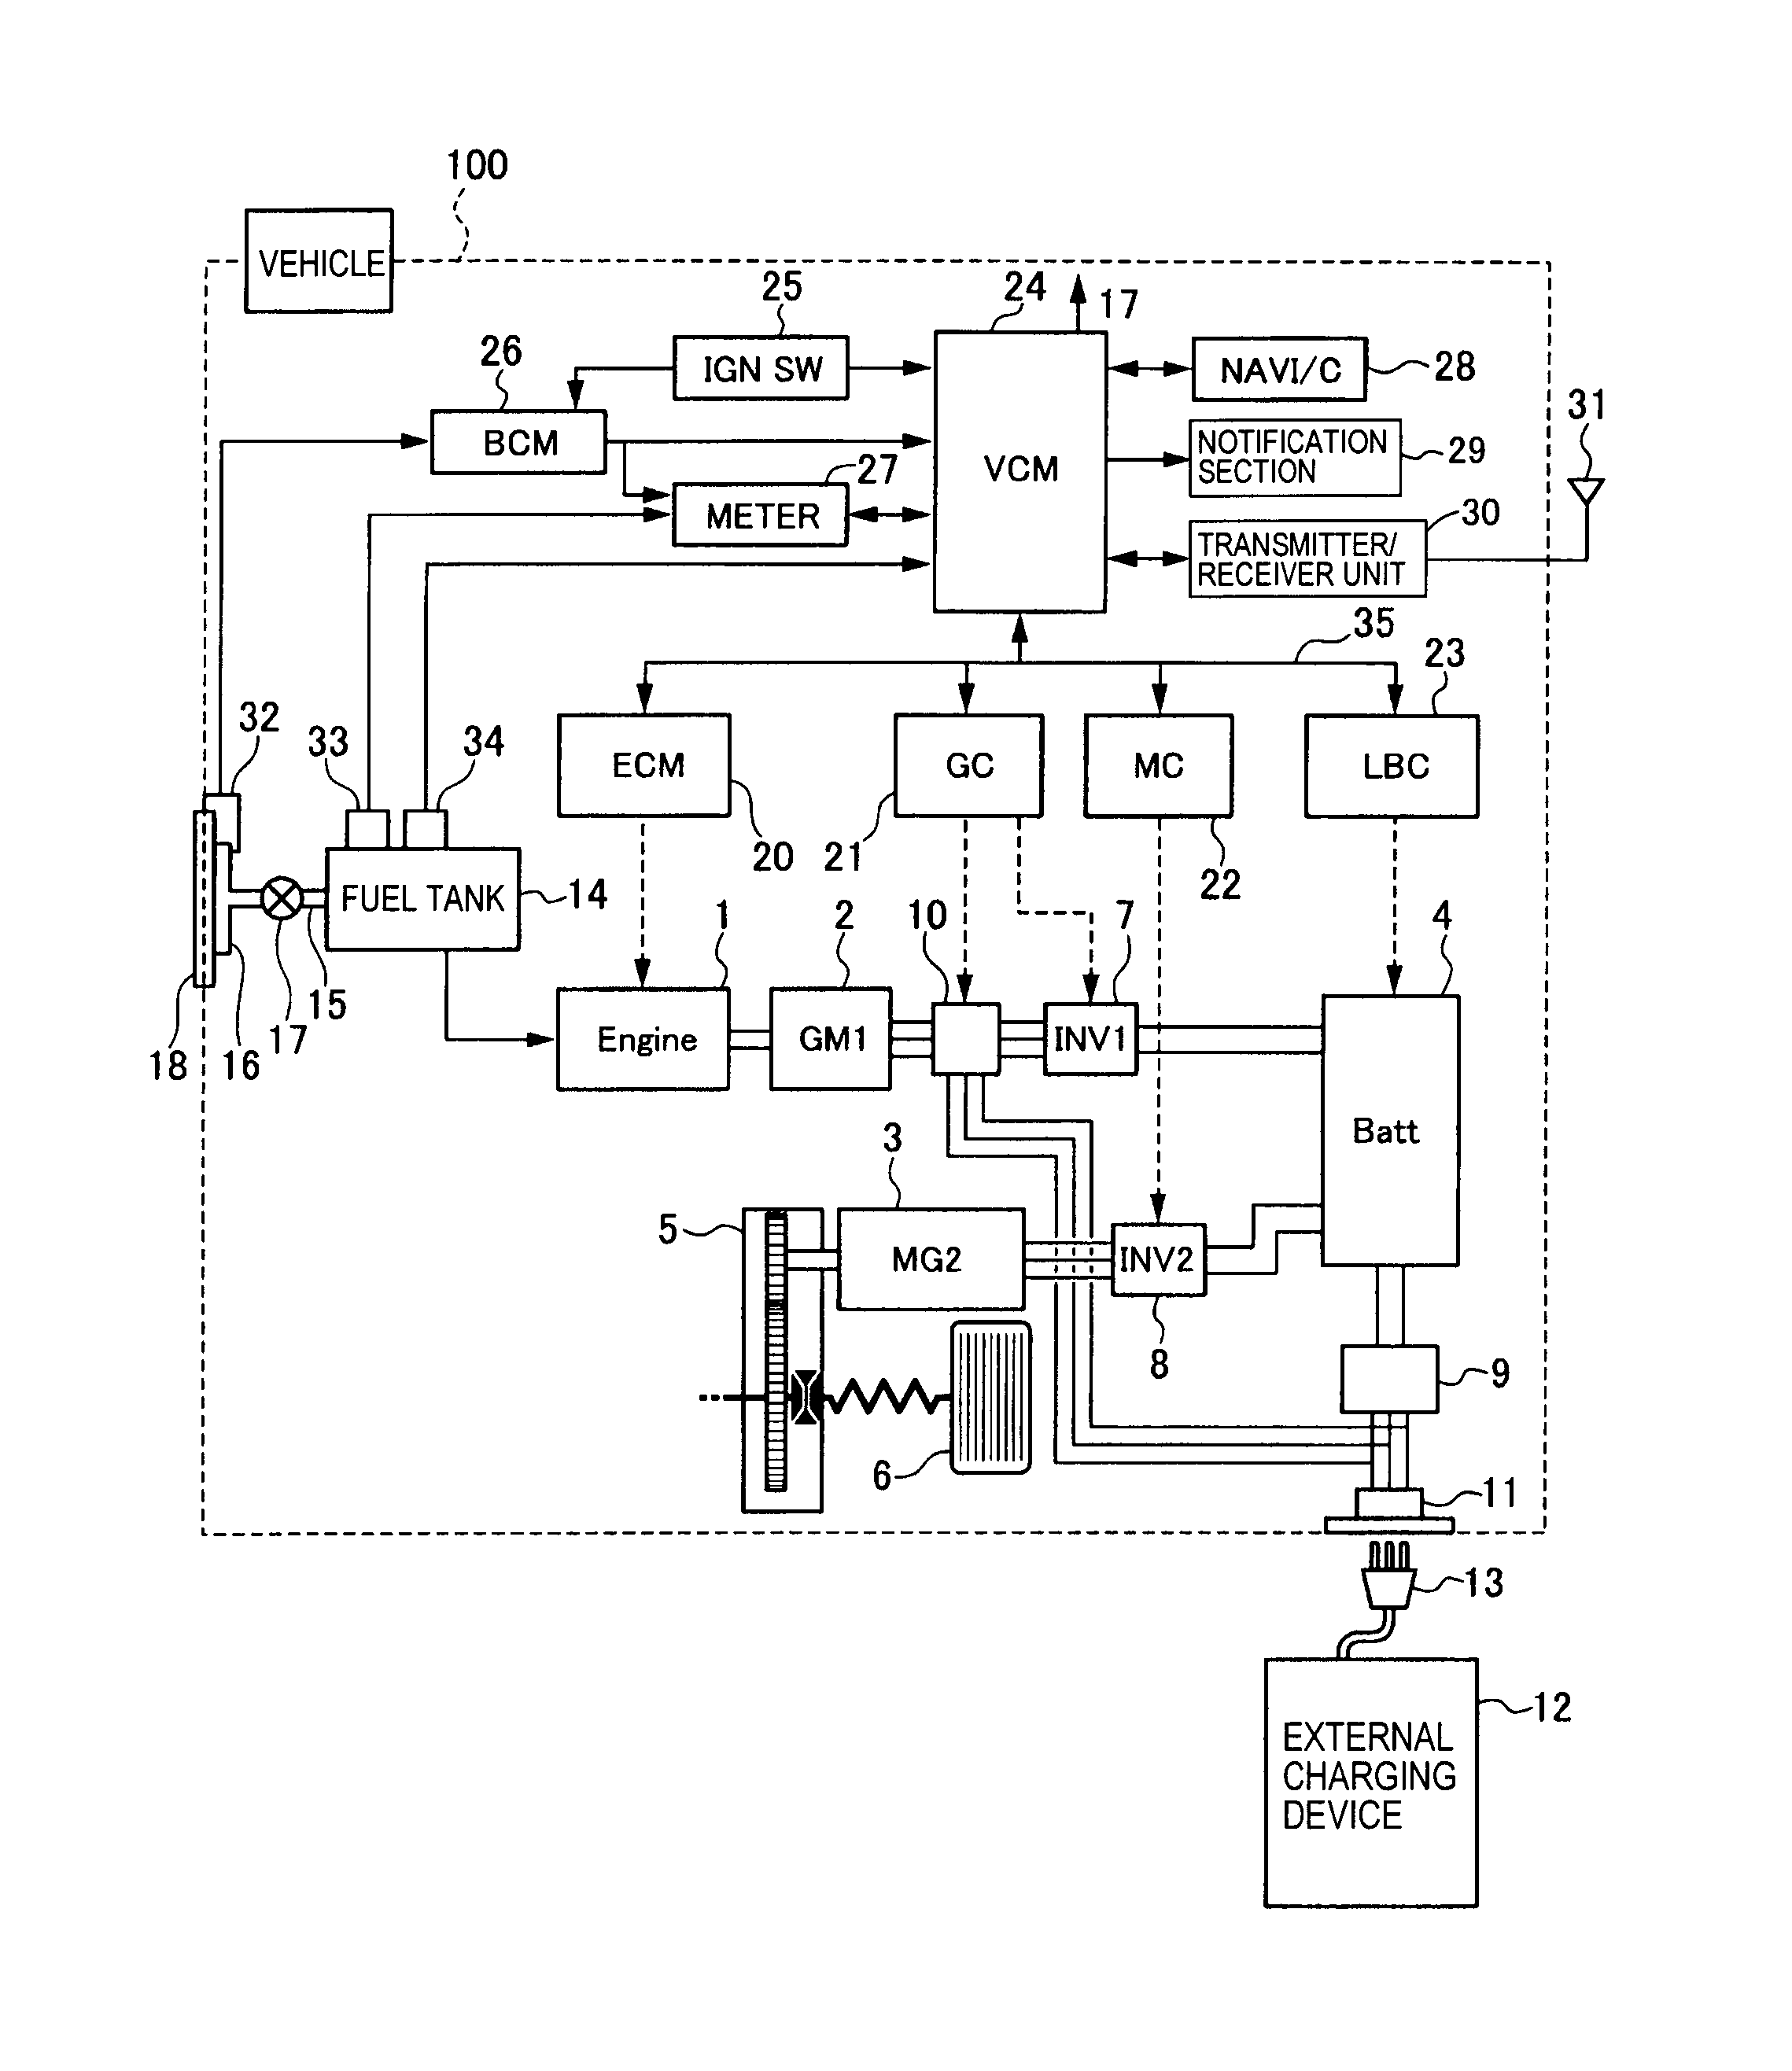 beckett burner wiring diagram